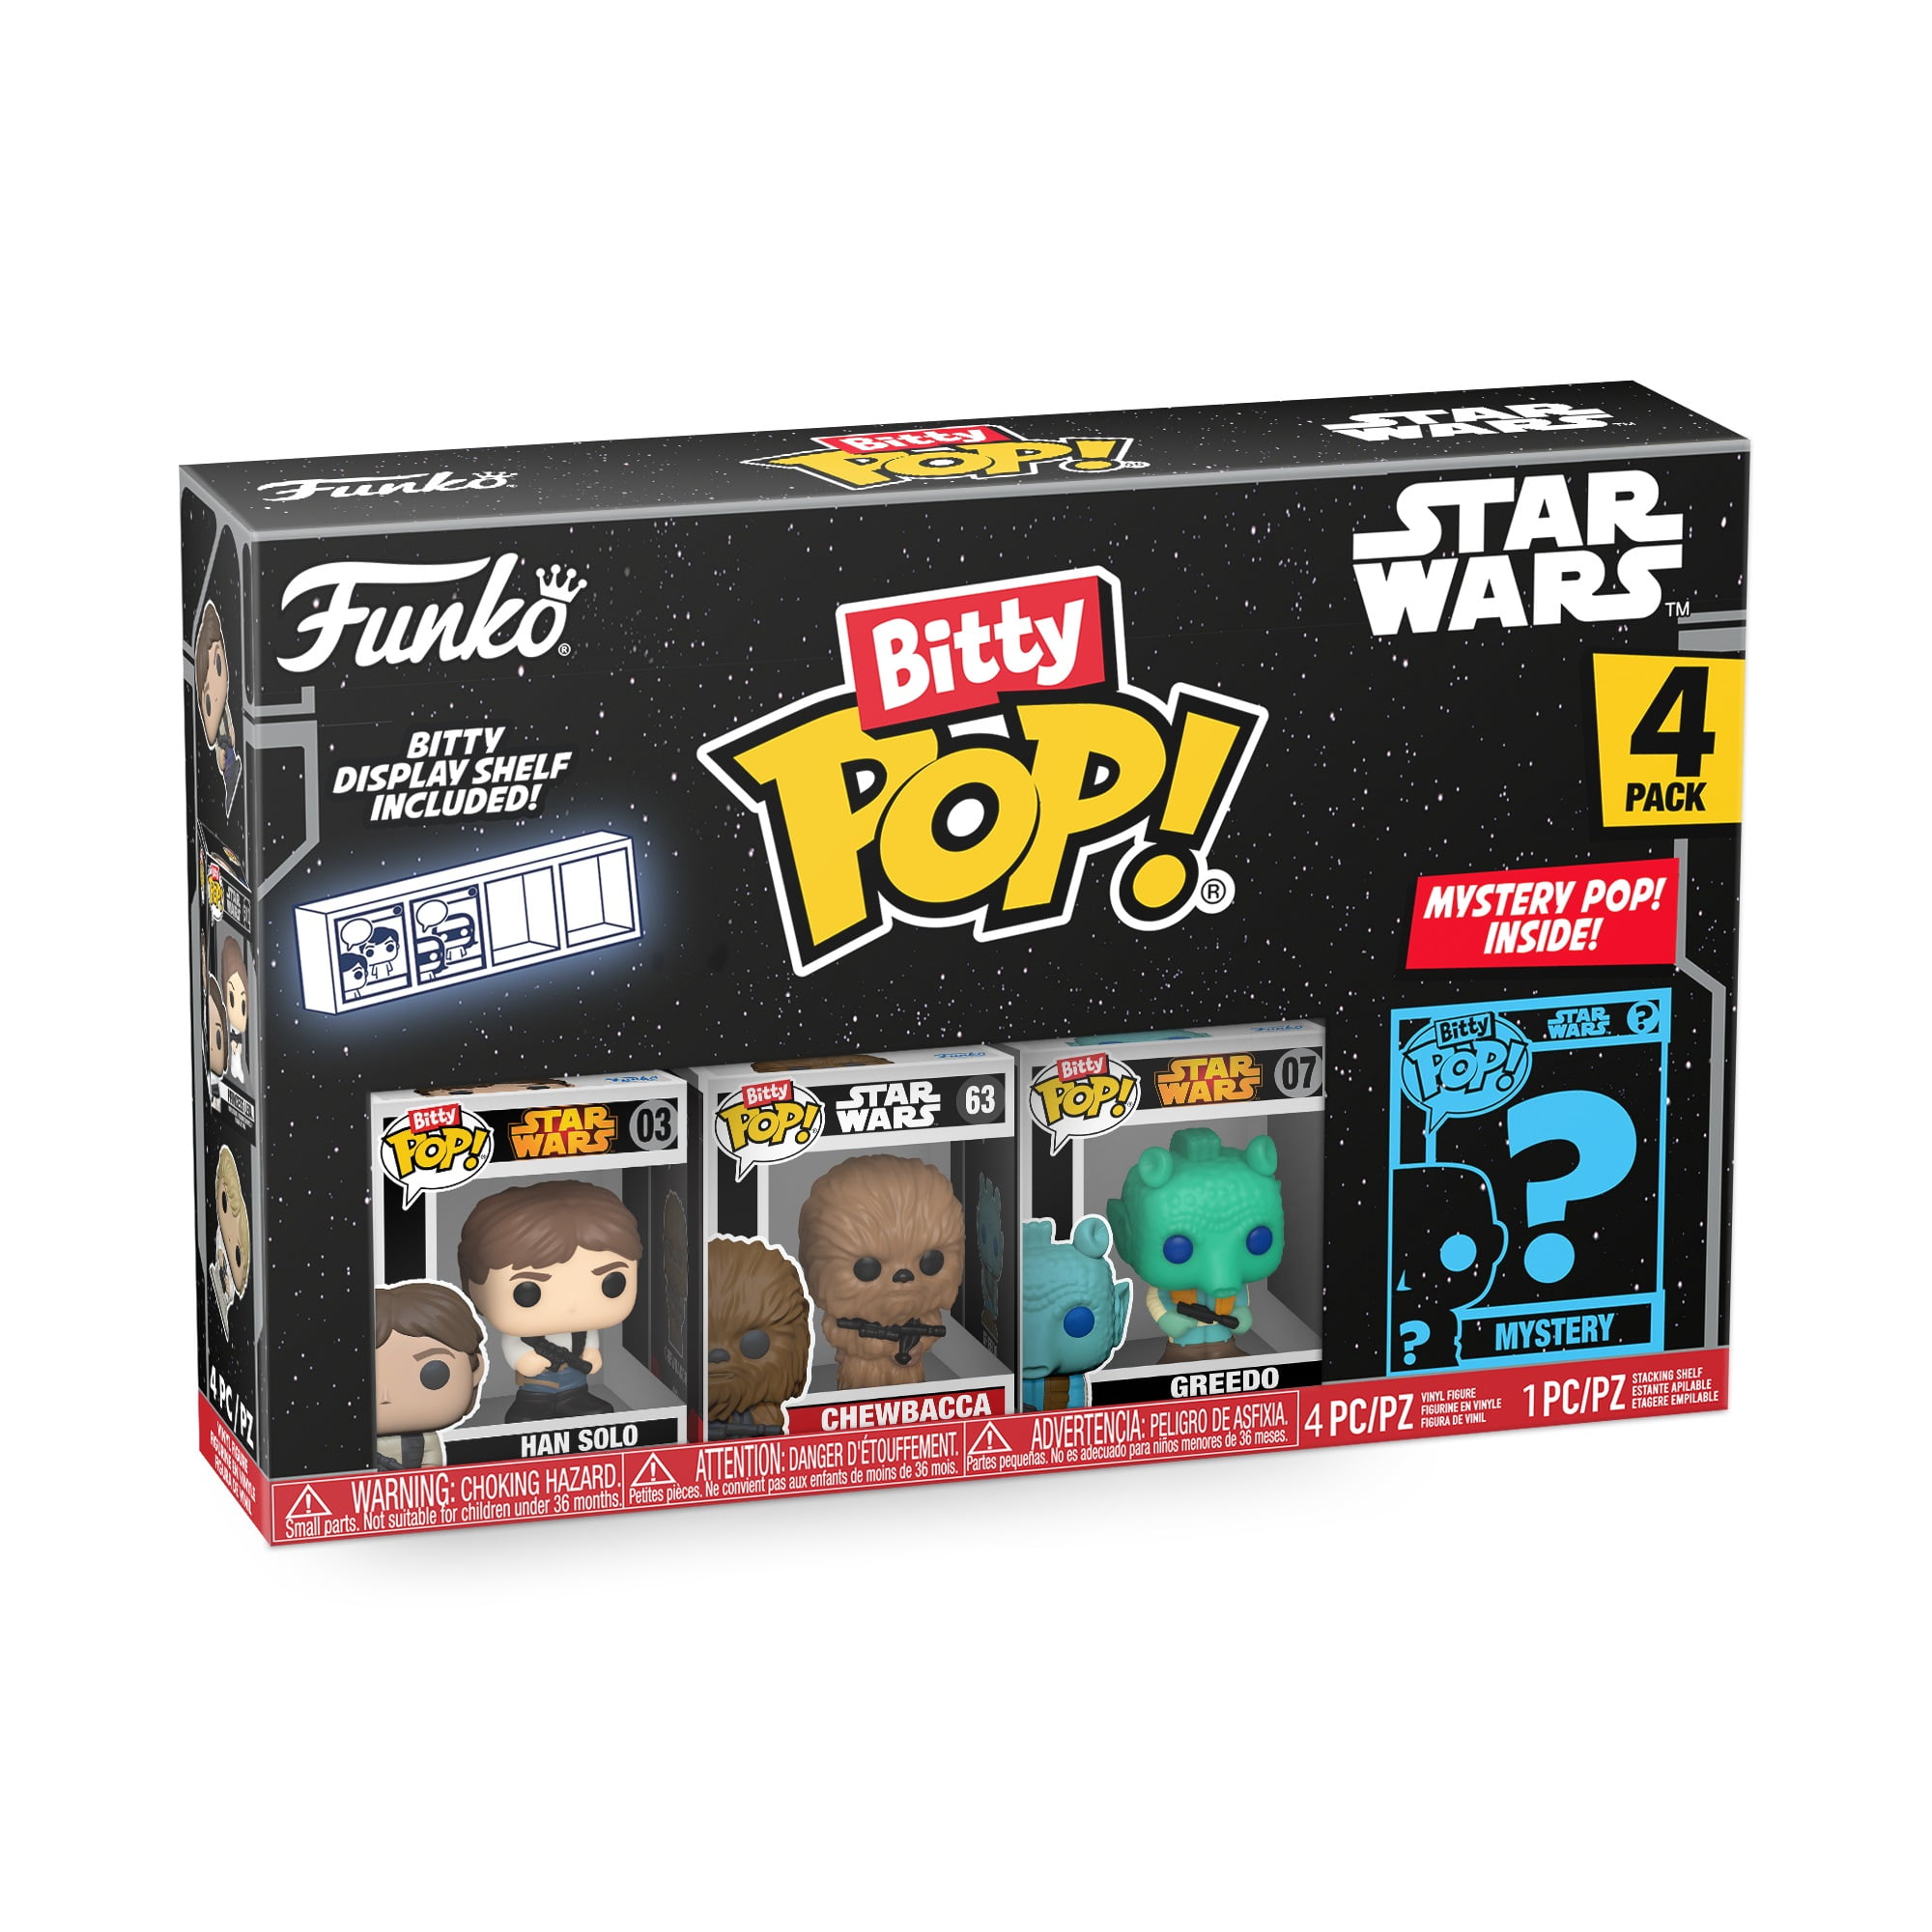 Funko Bitty Pop Star Wars Pack 4 Han Solo/Chewbacca/Greedo/Figura  Misteriosa